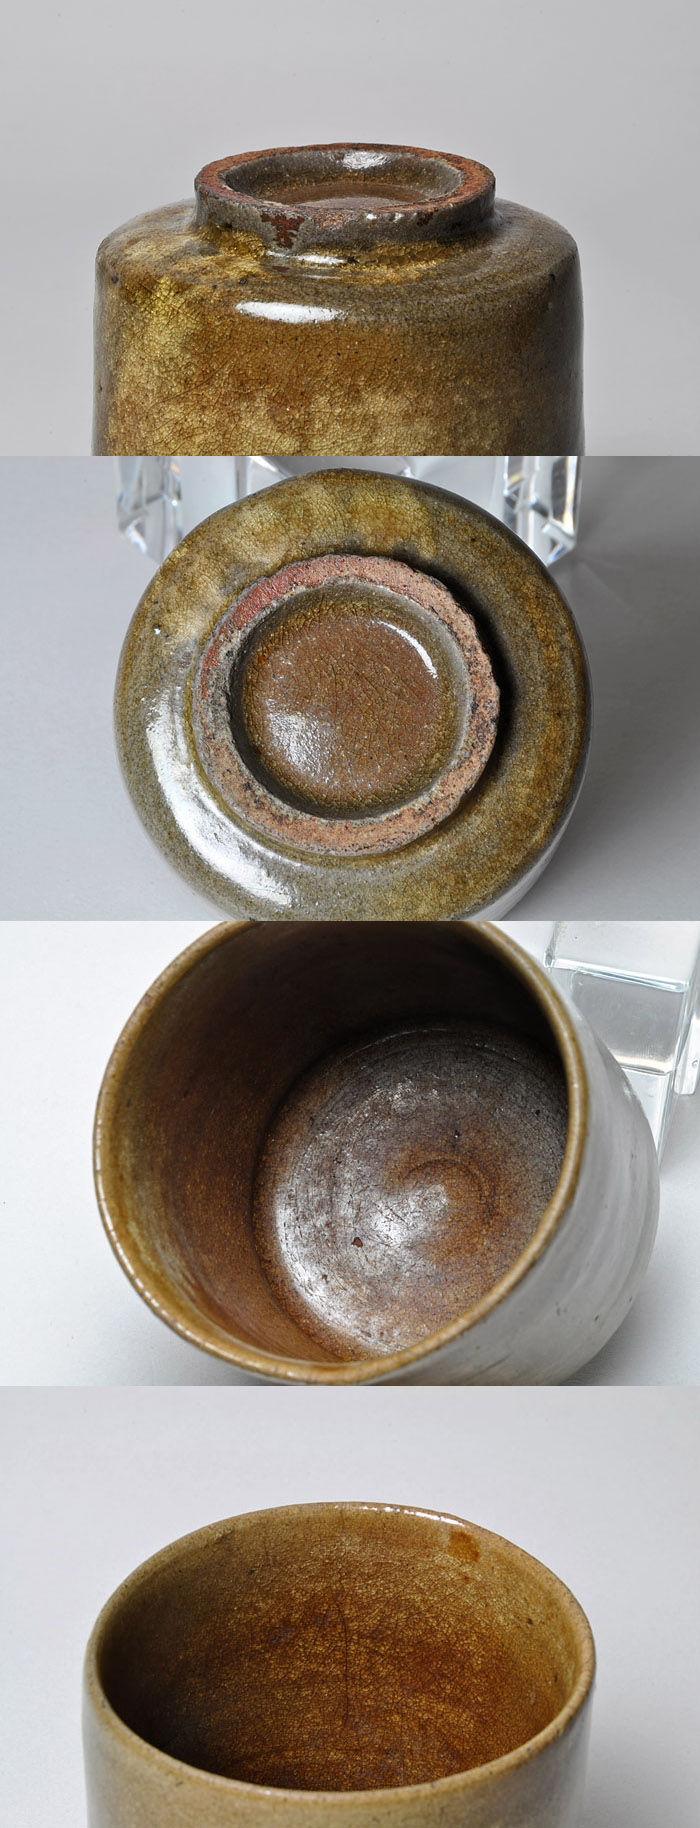 古美術 肥後 - 古上野<br>筒茶碗 | 古美術品専門サイト fufufufu.com